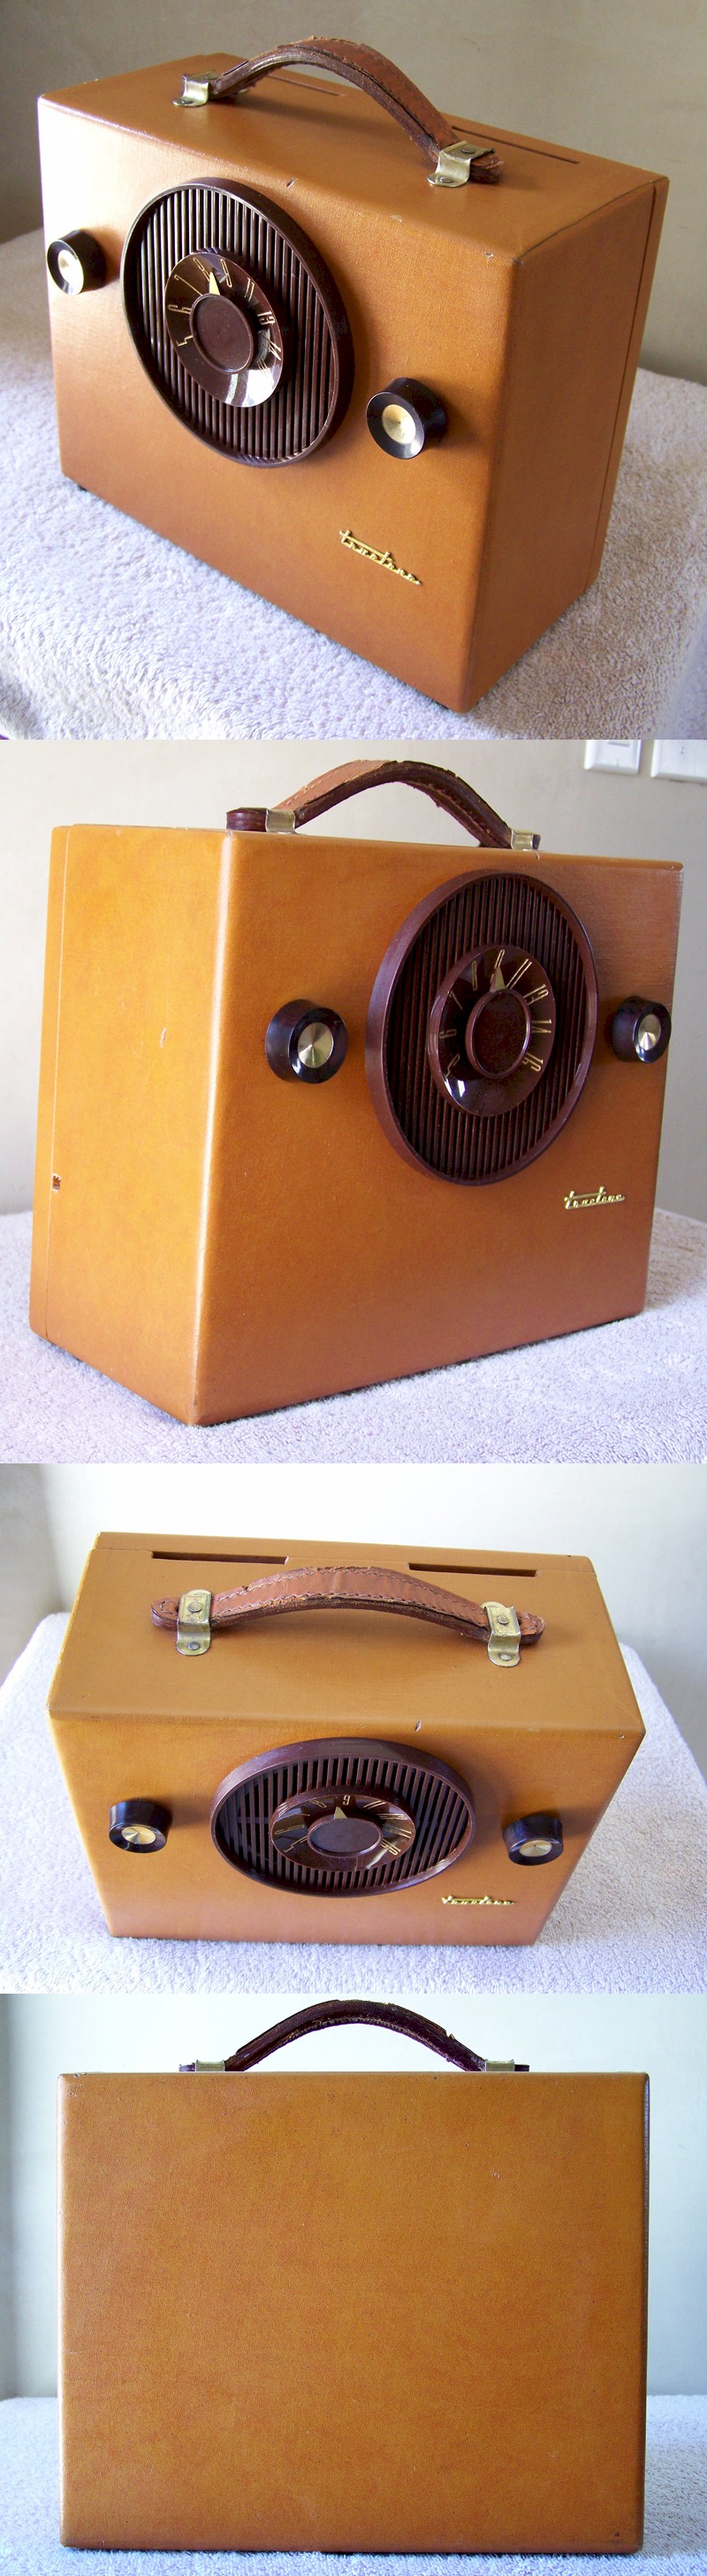 Truetone D-3465 Portable (1954)